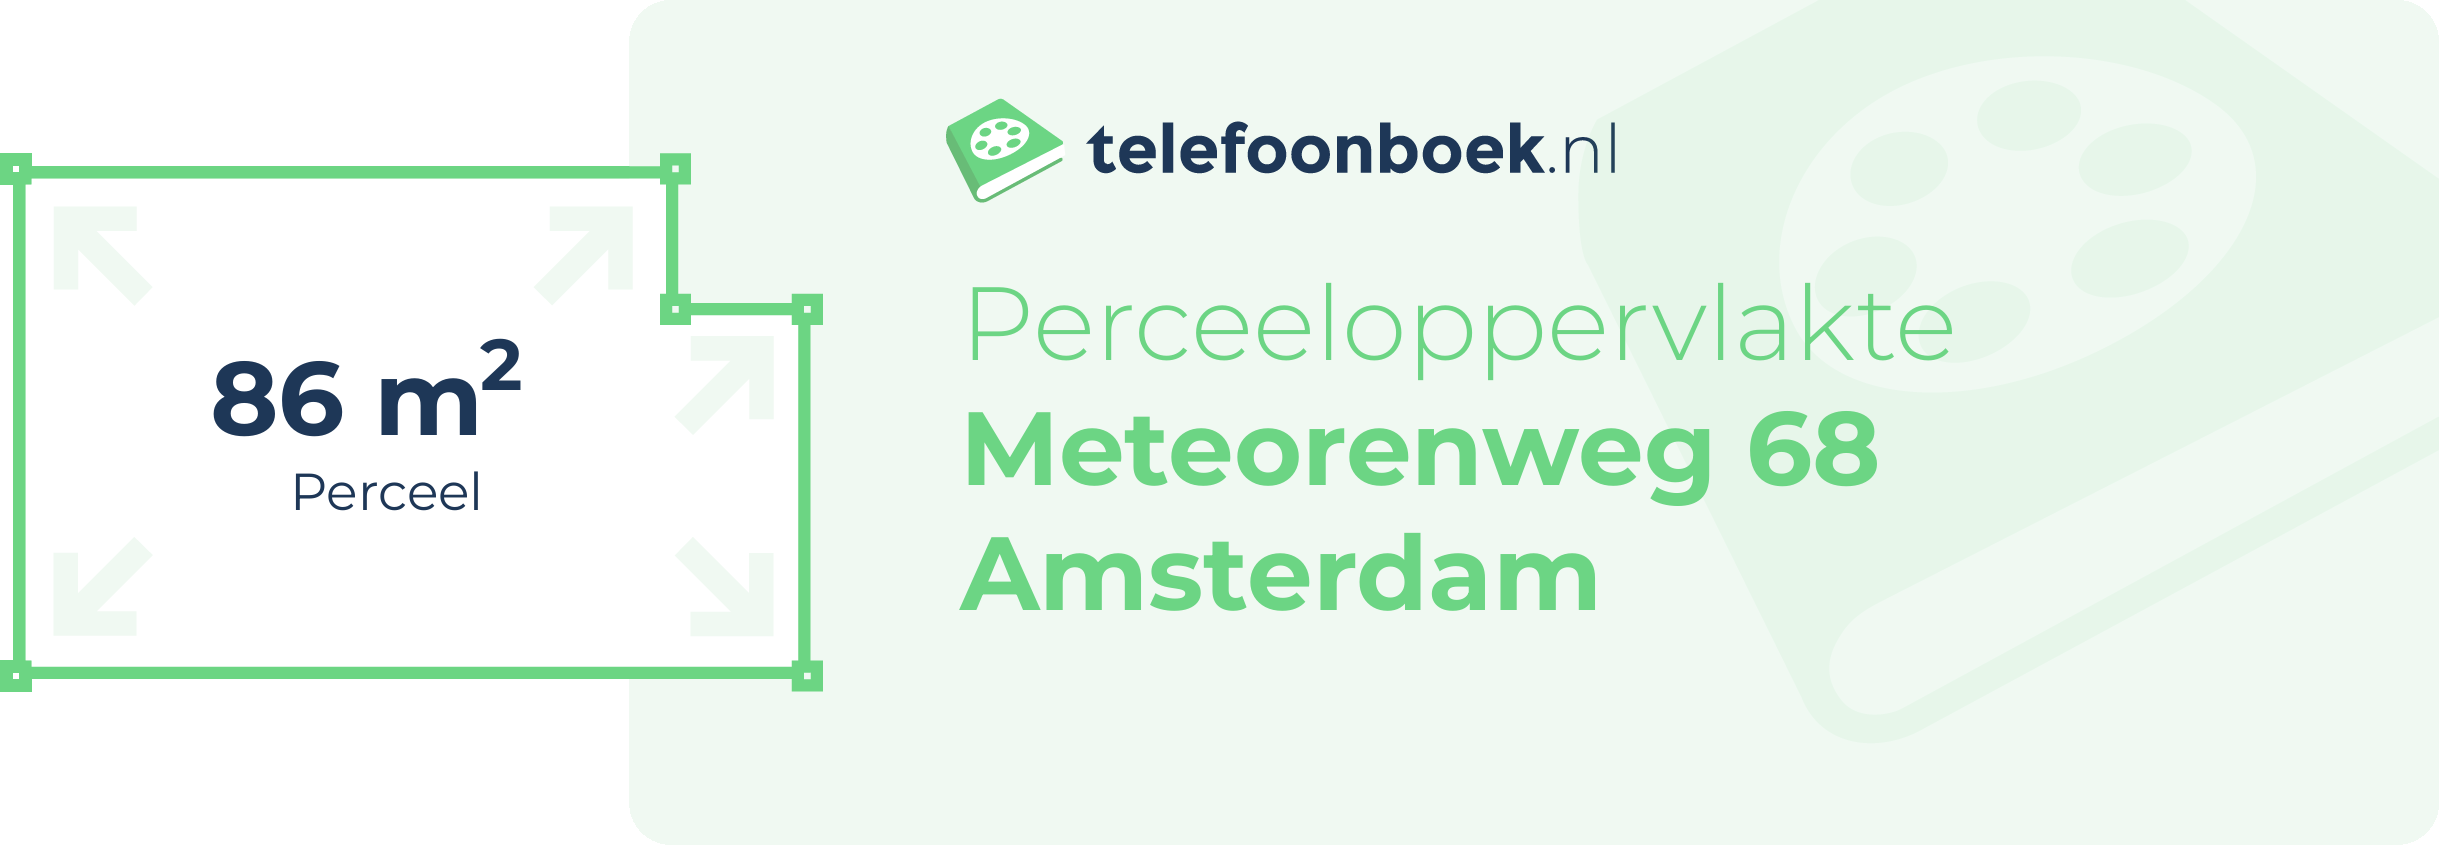 Perceeloppervlakte Meteorenweg 68 Amsterdam